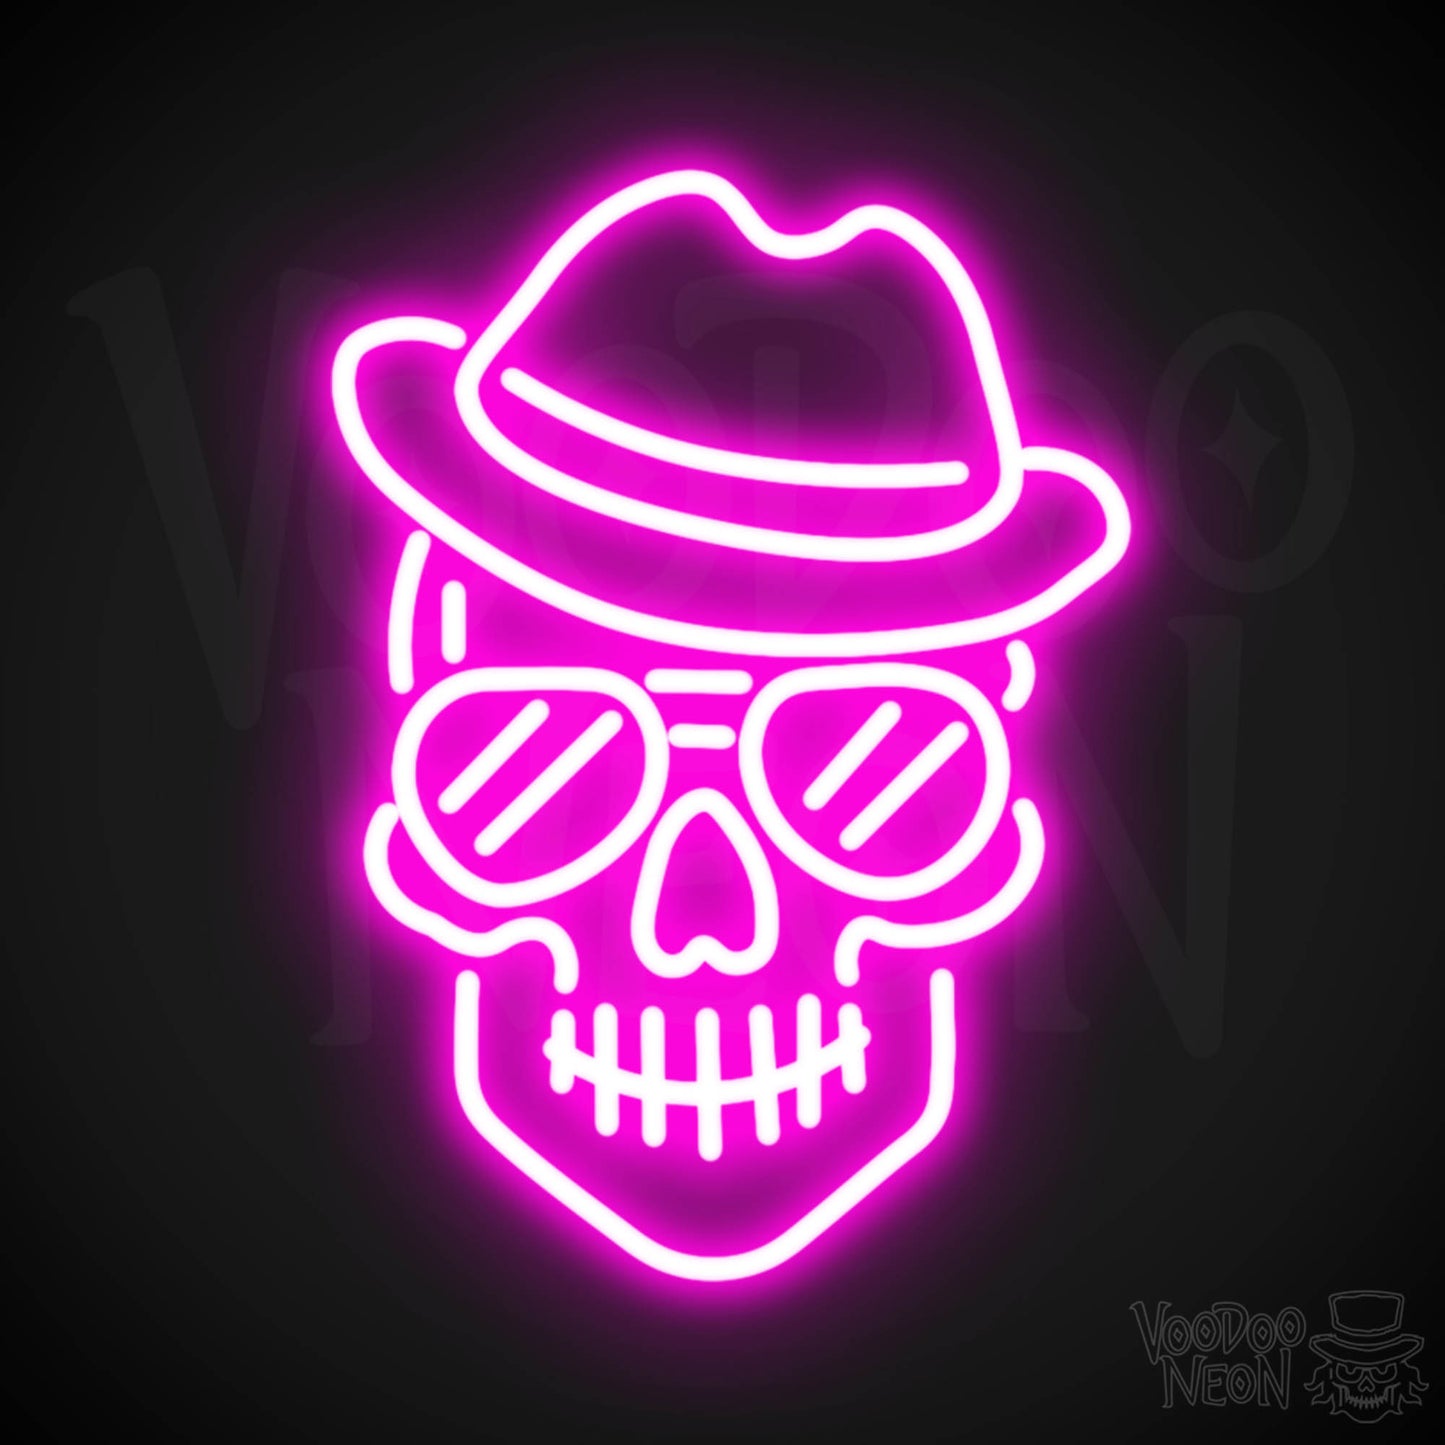 Skull Face Neon Sign - Neon Skull Face Sign - Neon Skull Light - Wall Art - Color Pink